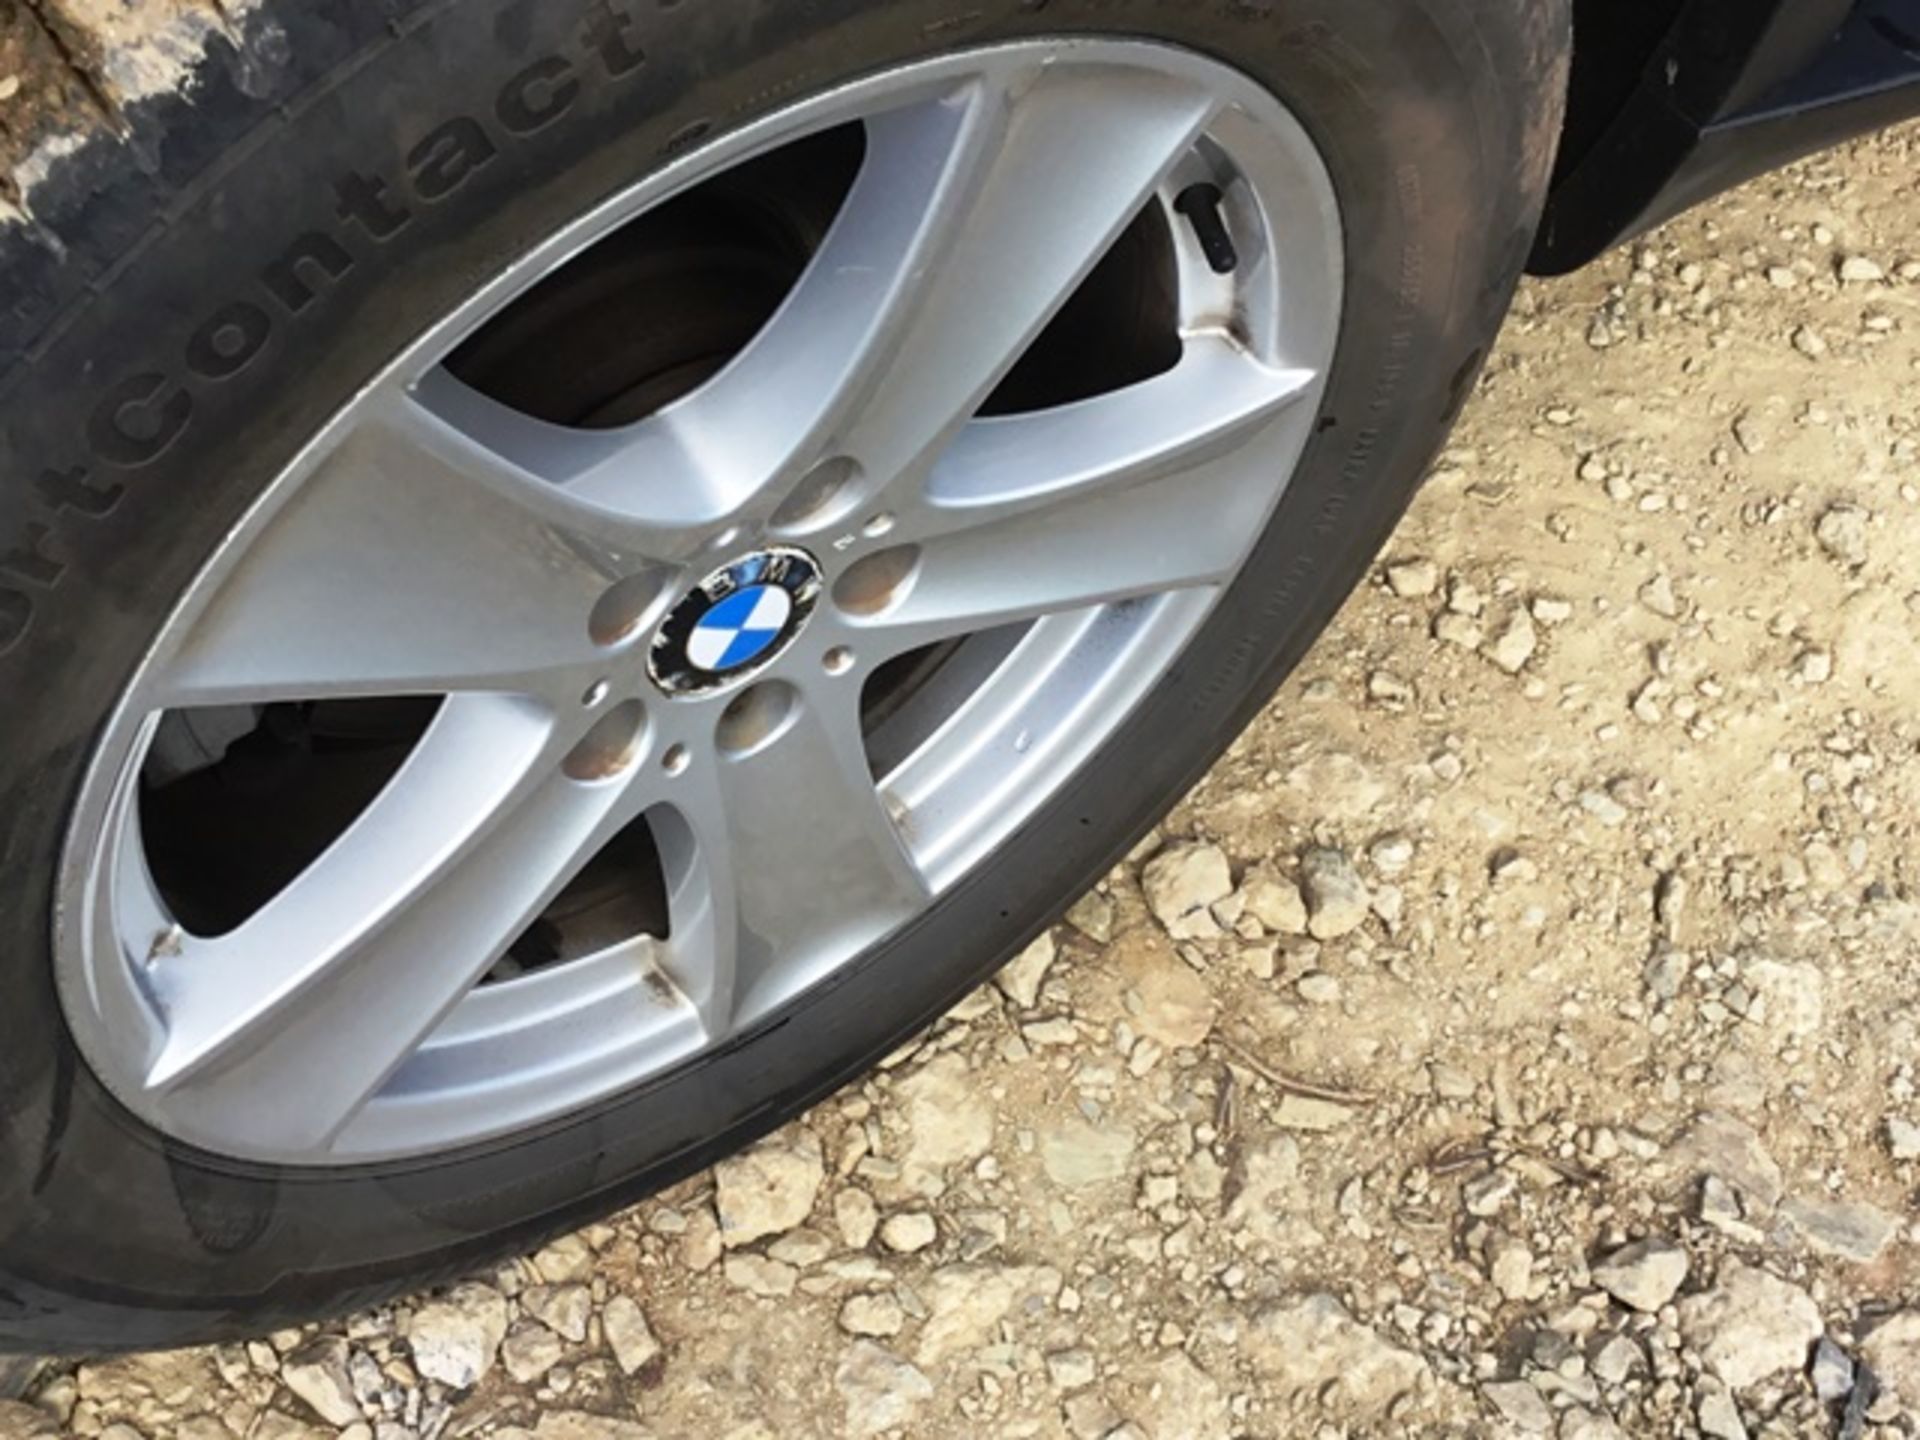 BMW X5 Xdrive 30d Se Auto, 245bhp, Registration: WA60 LBL, Recorded mileage: 66,702 as of 28th Nov - Image 7 of 8